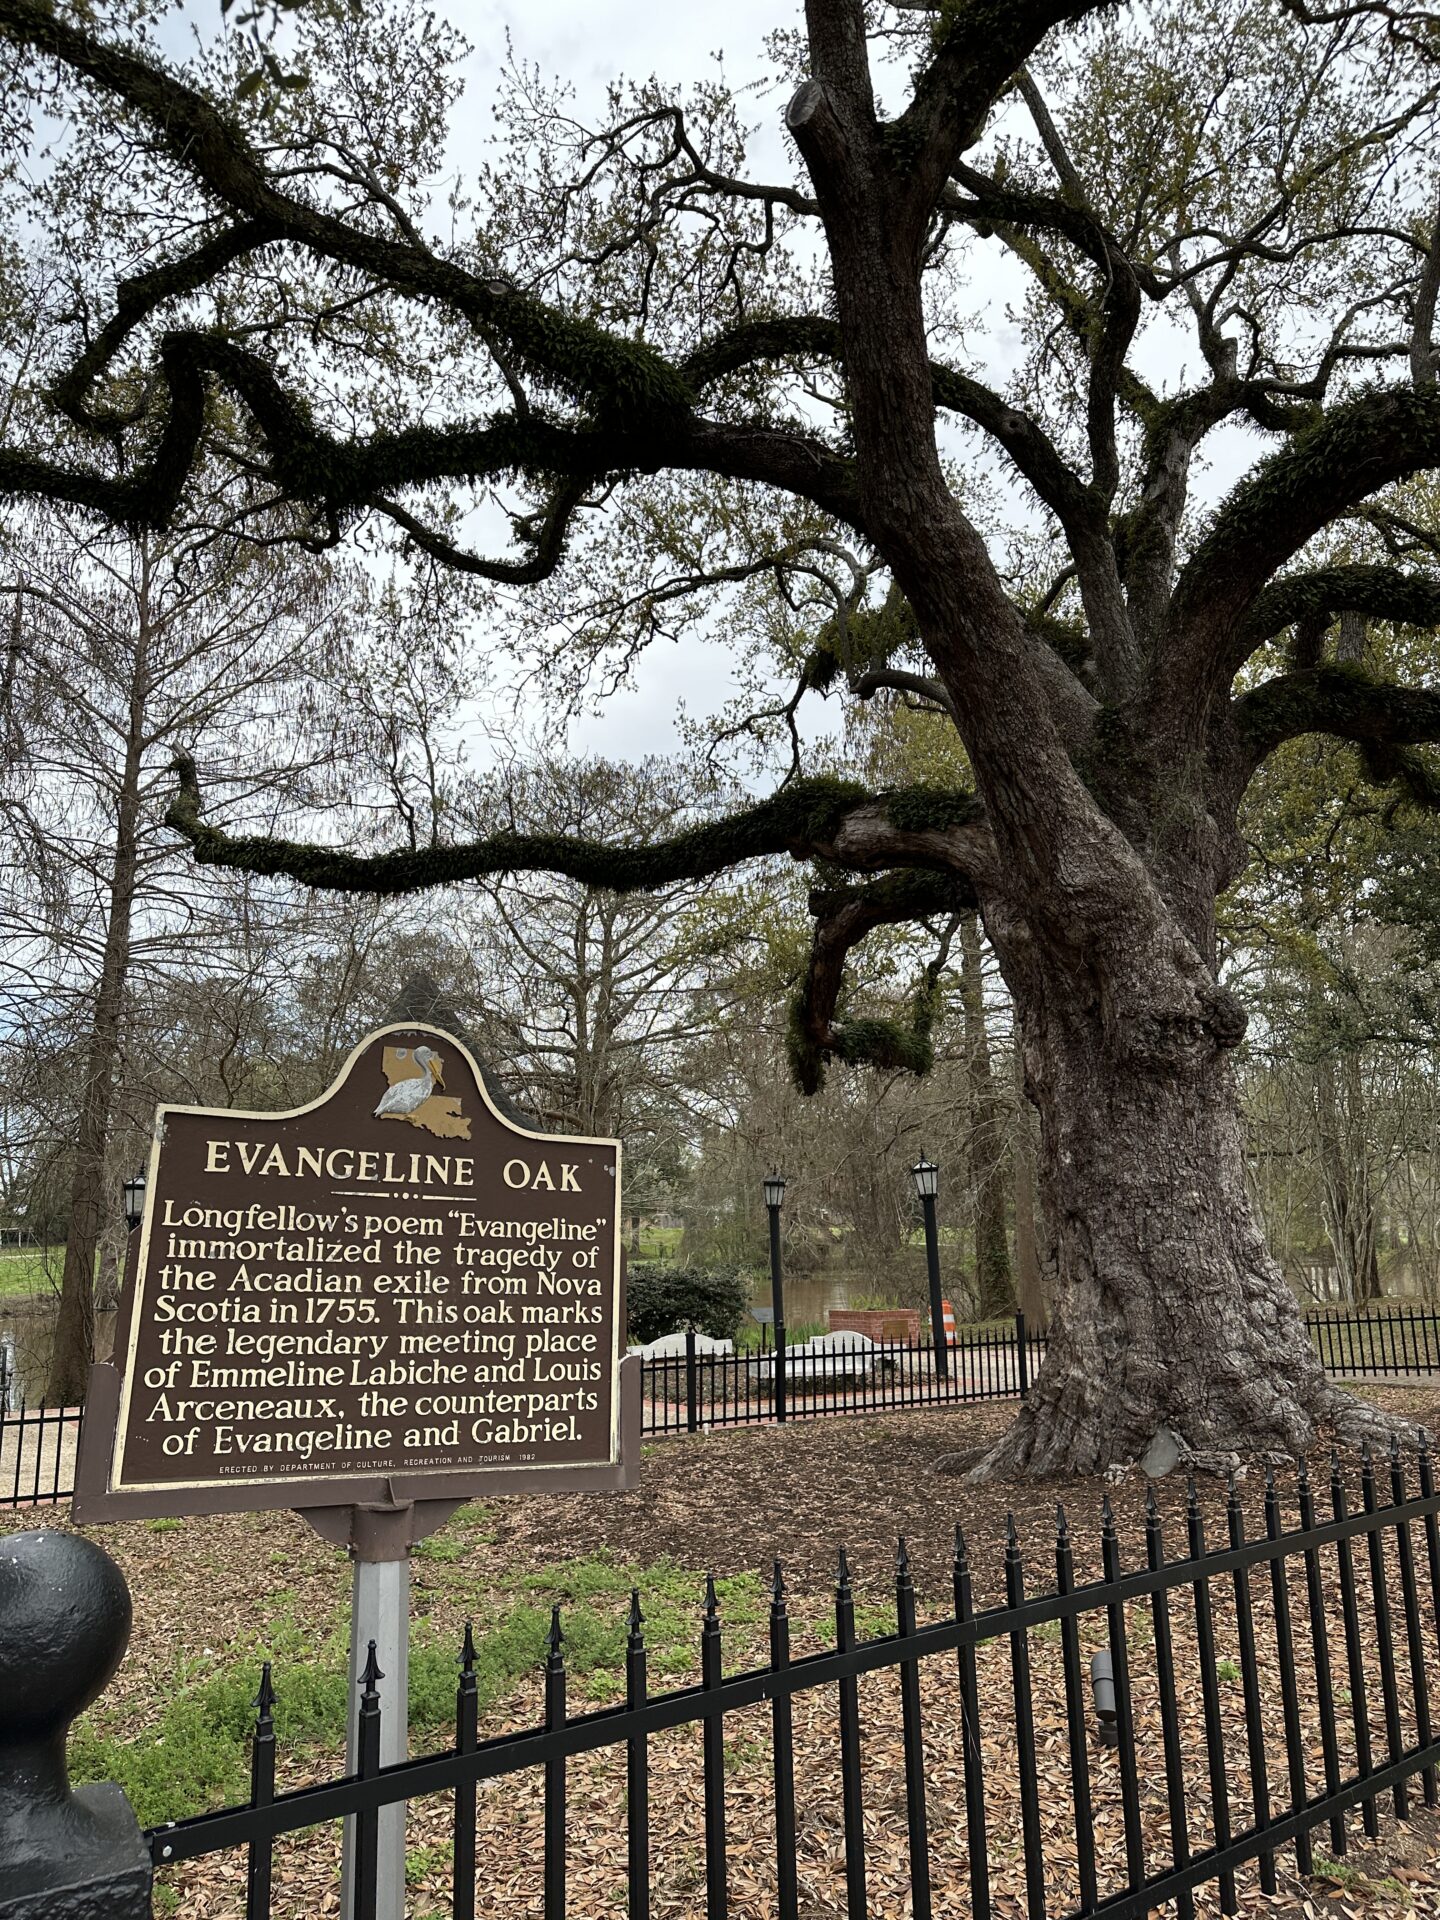 The Evangeline Oak at Evangeline Oak Park